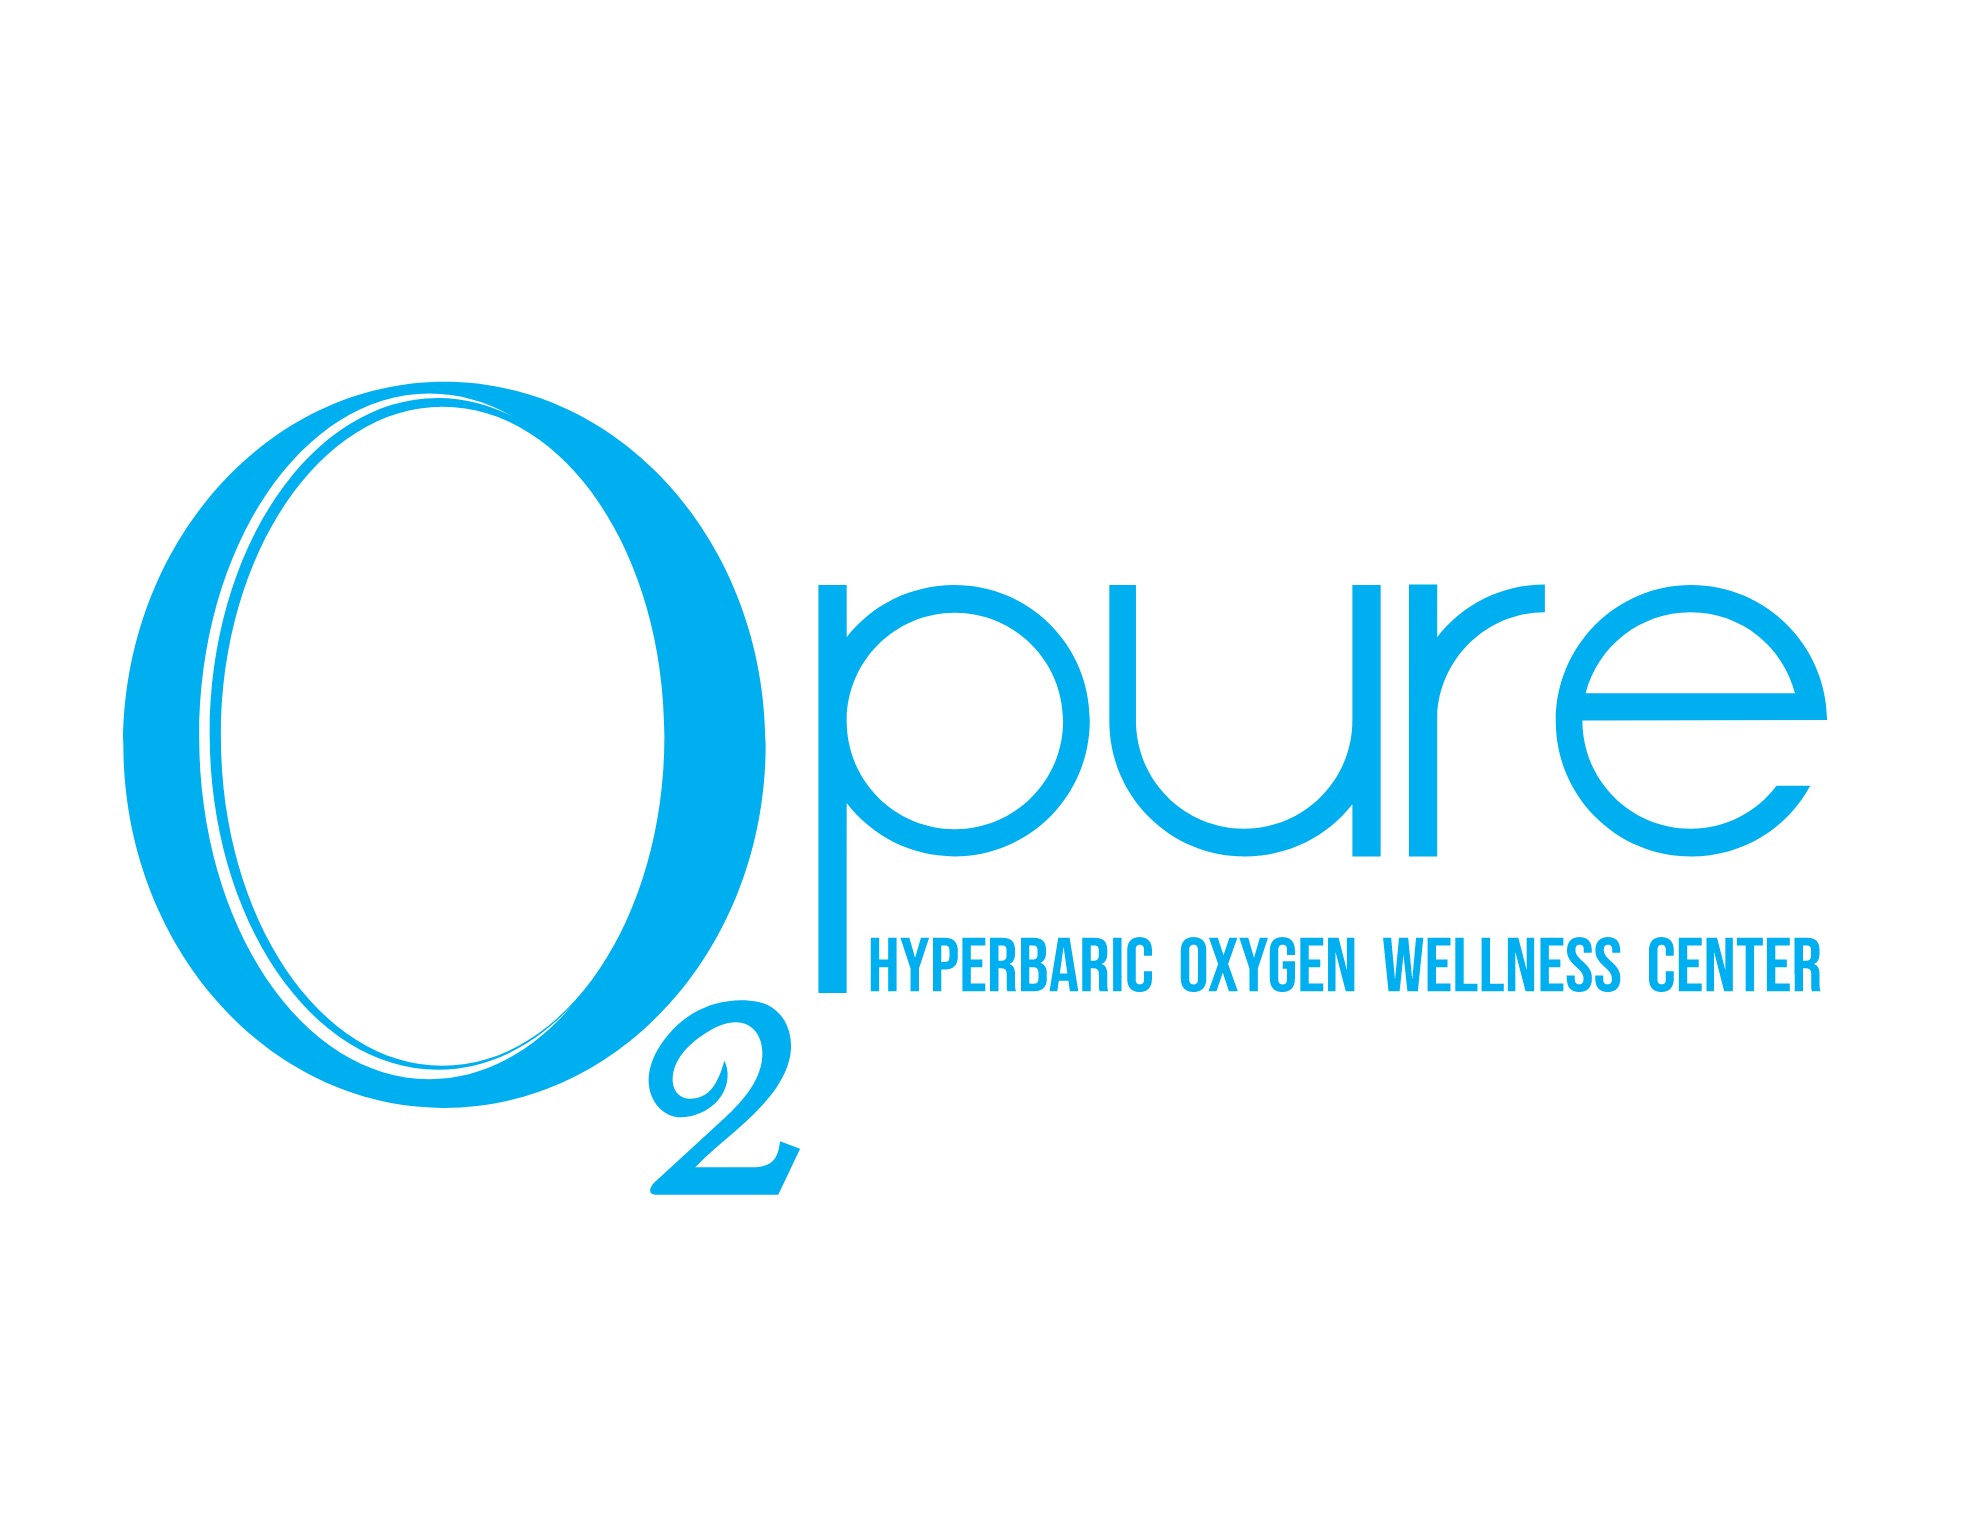 O2 Pure Hyperbaric Oxygen Wellness Center - Safa, Maklad MD